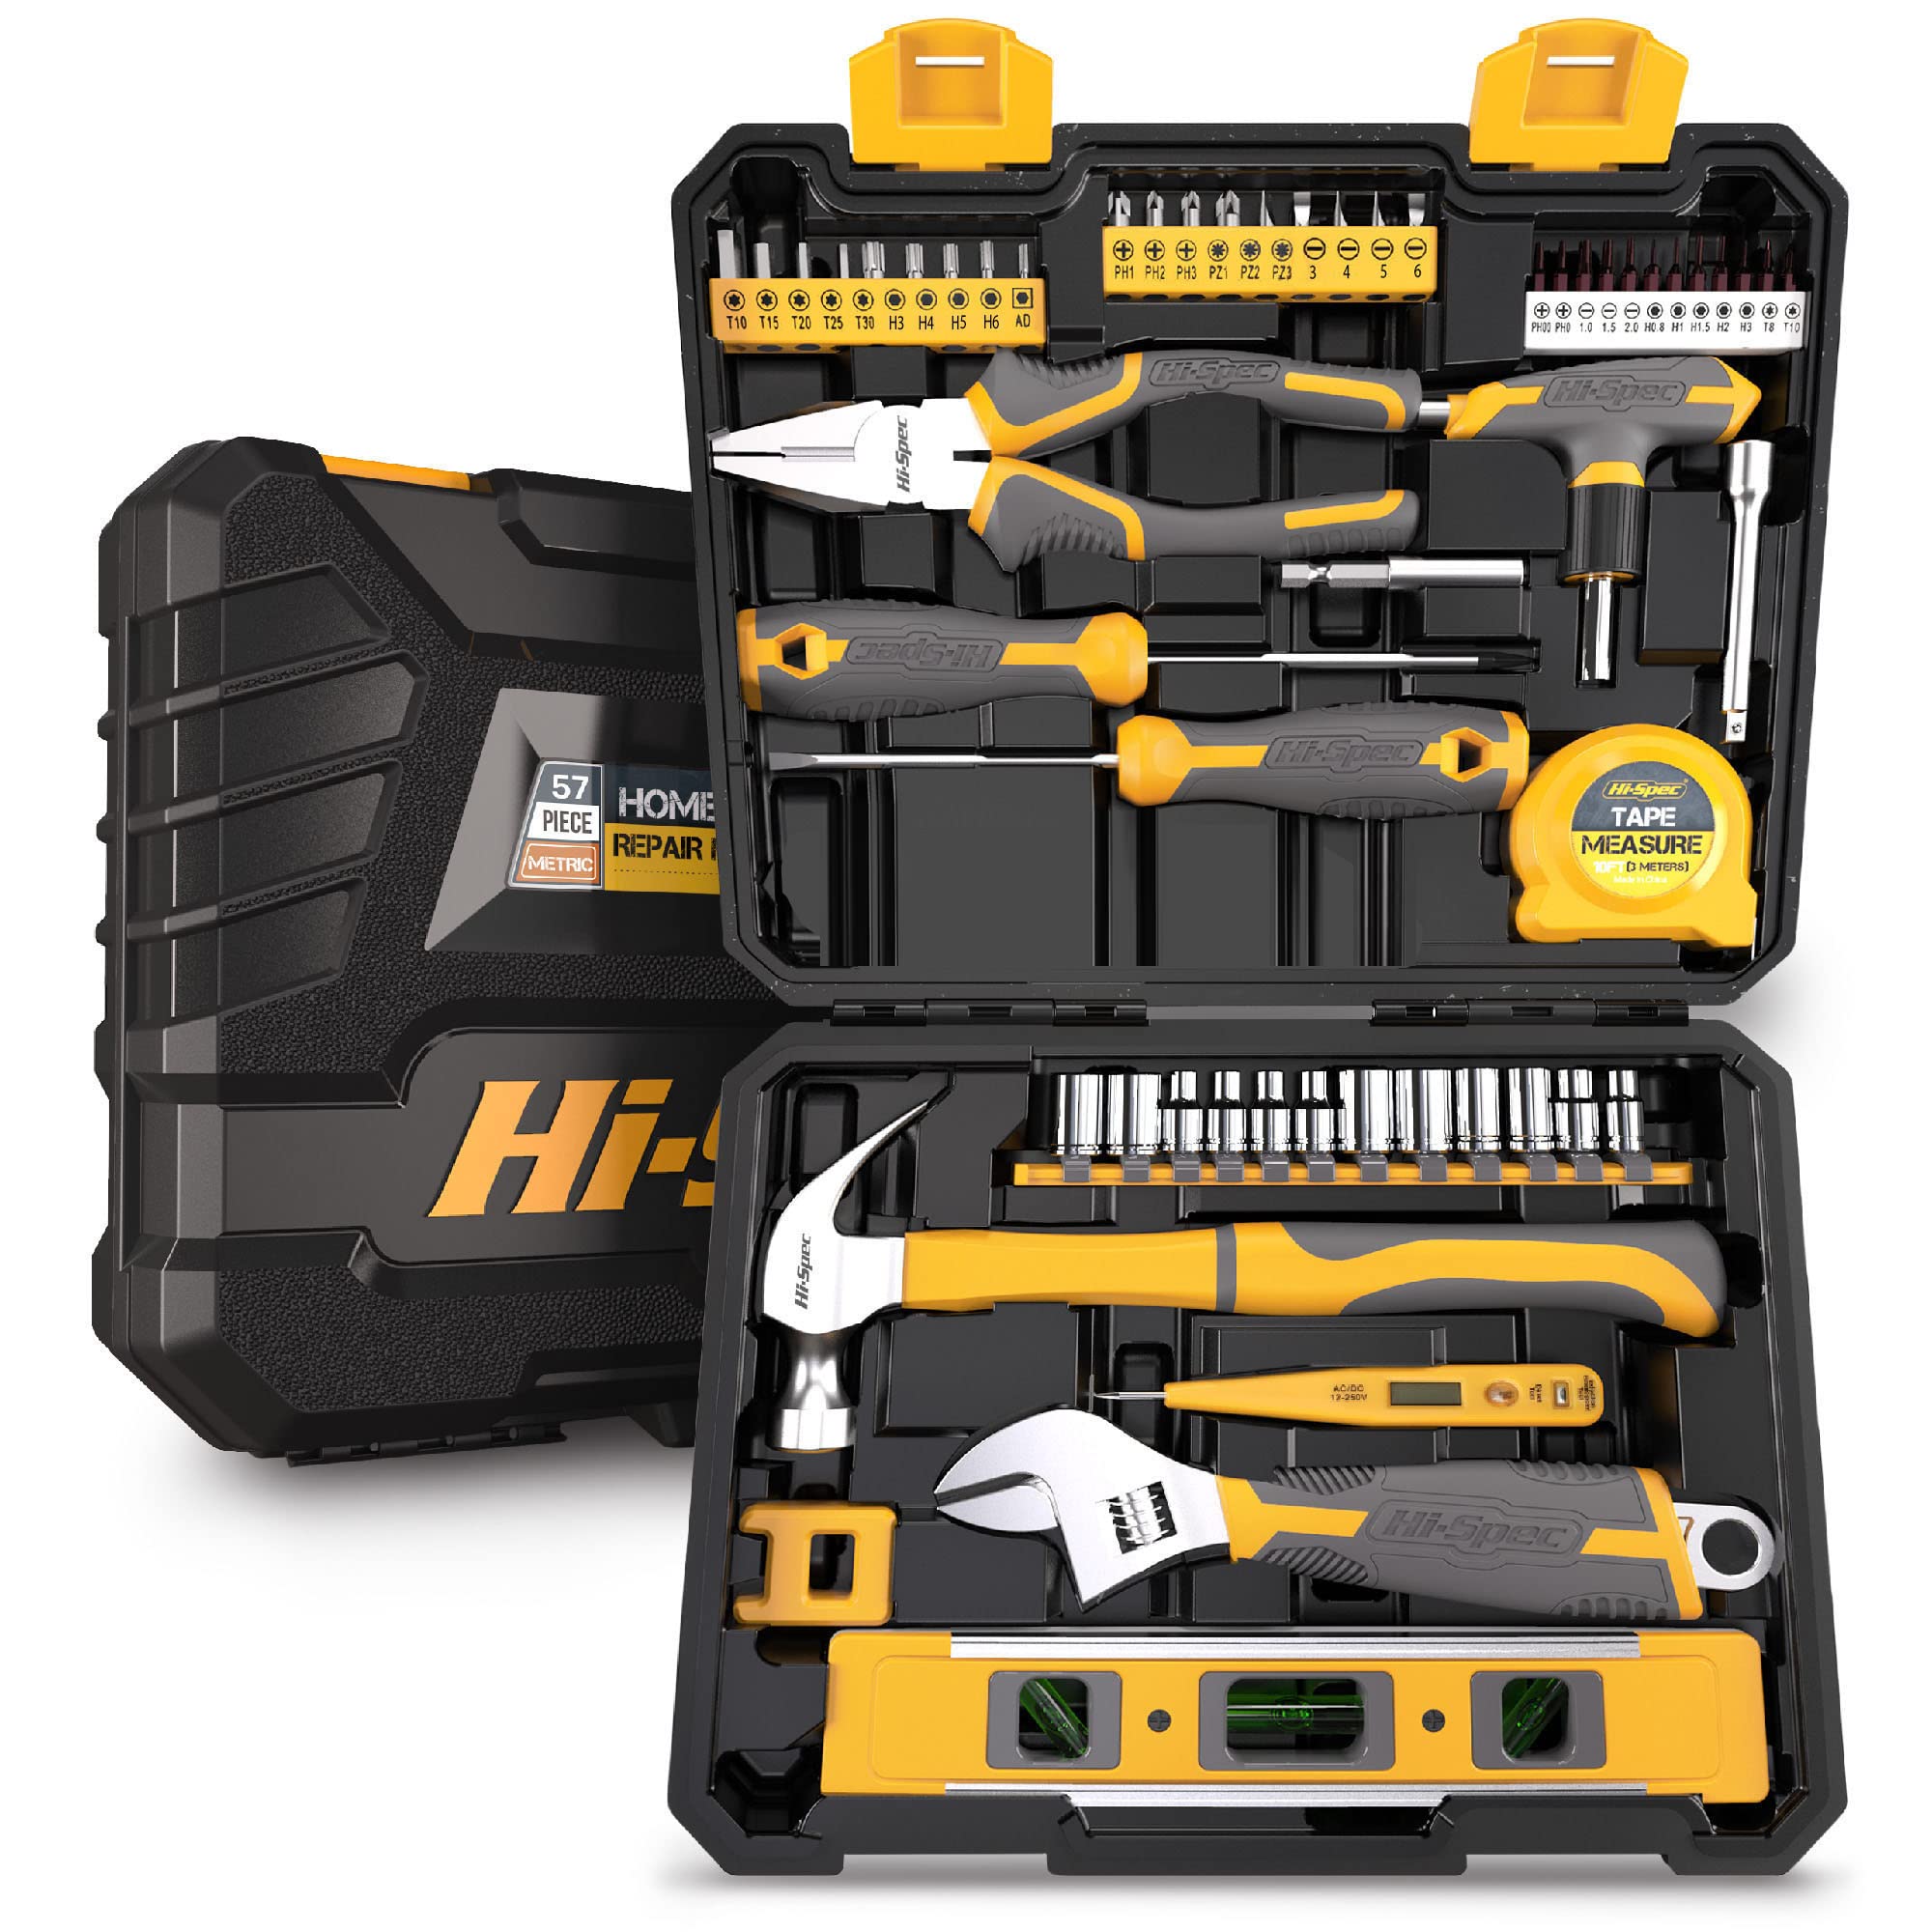 Hi-Spec 57piece Home Garage Mechanics Tool Kit Set. Complete Essential Hand Tools for DIY Repairs並行輸入品